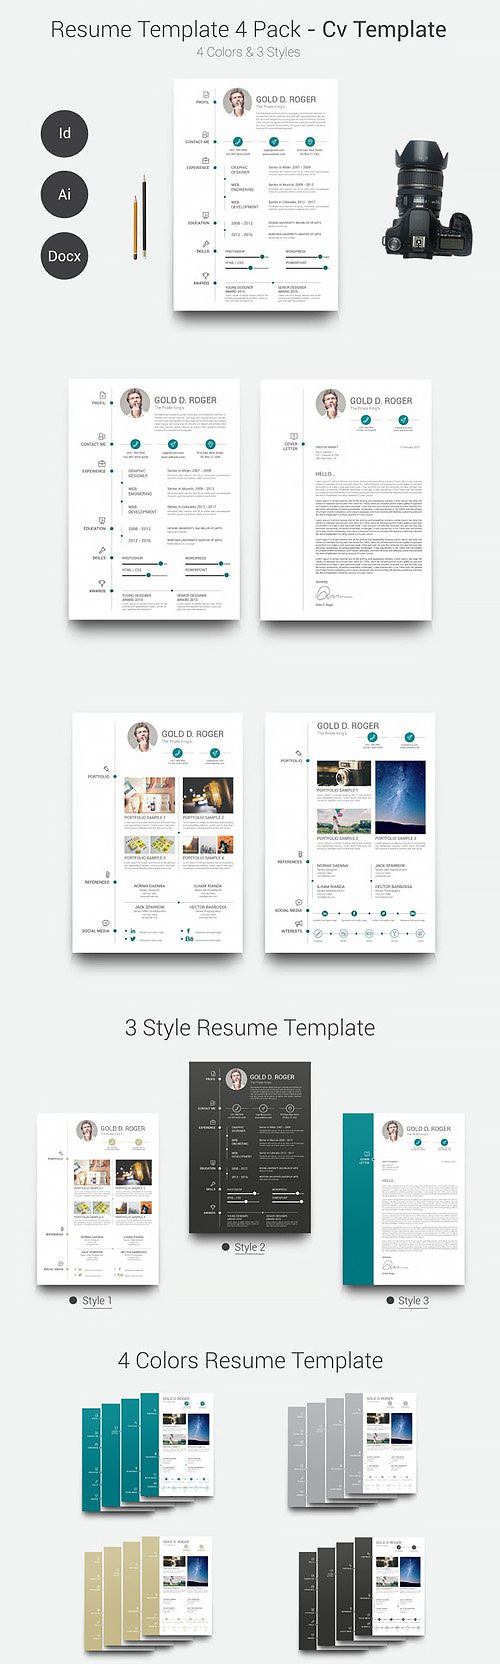 Indesign - Resume/CV Template 4 Pack